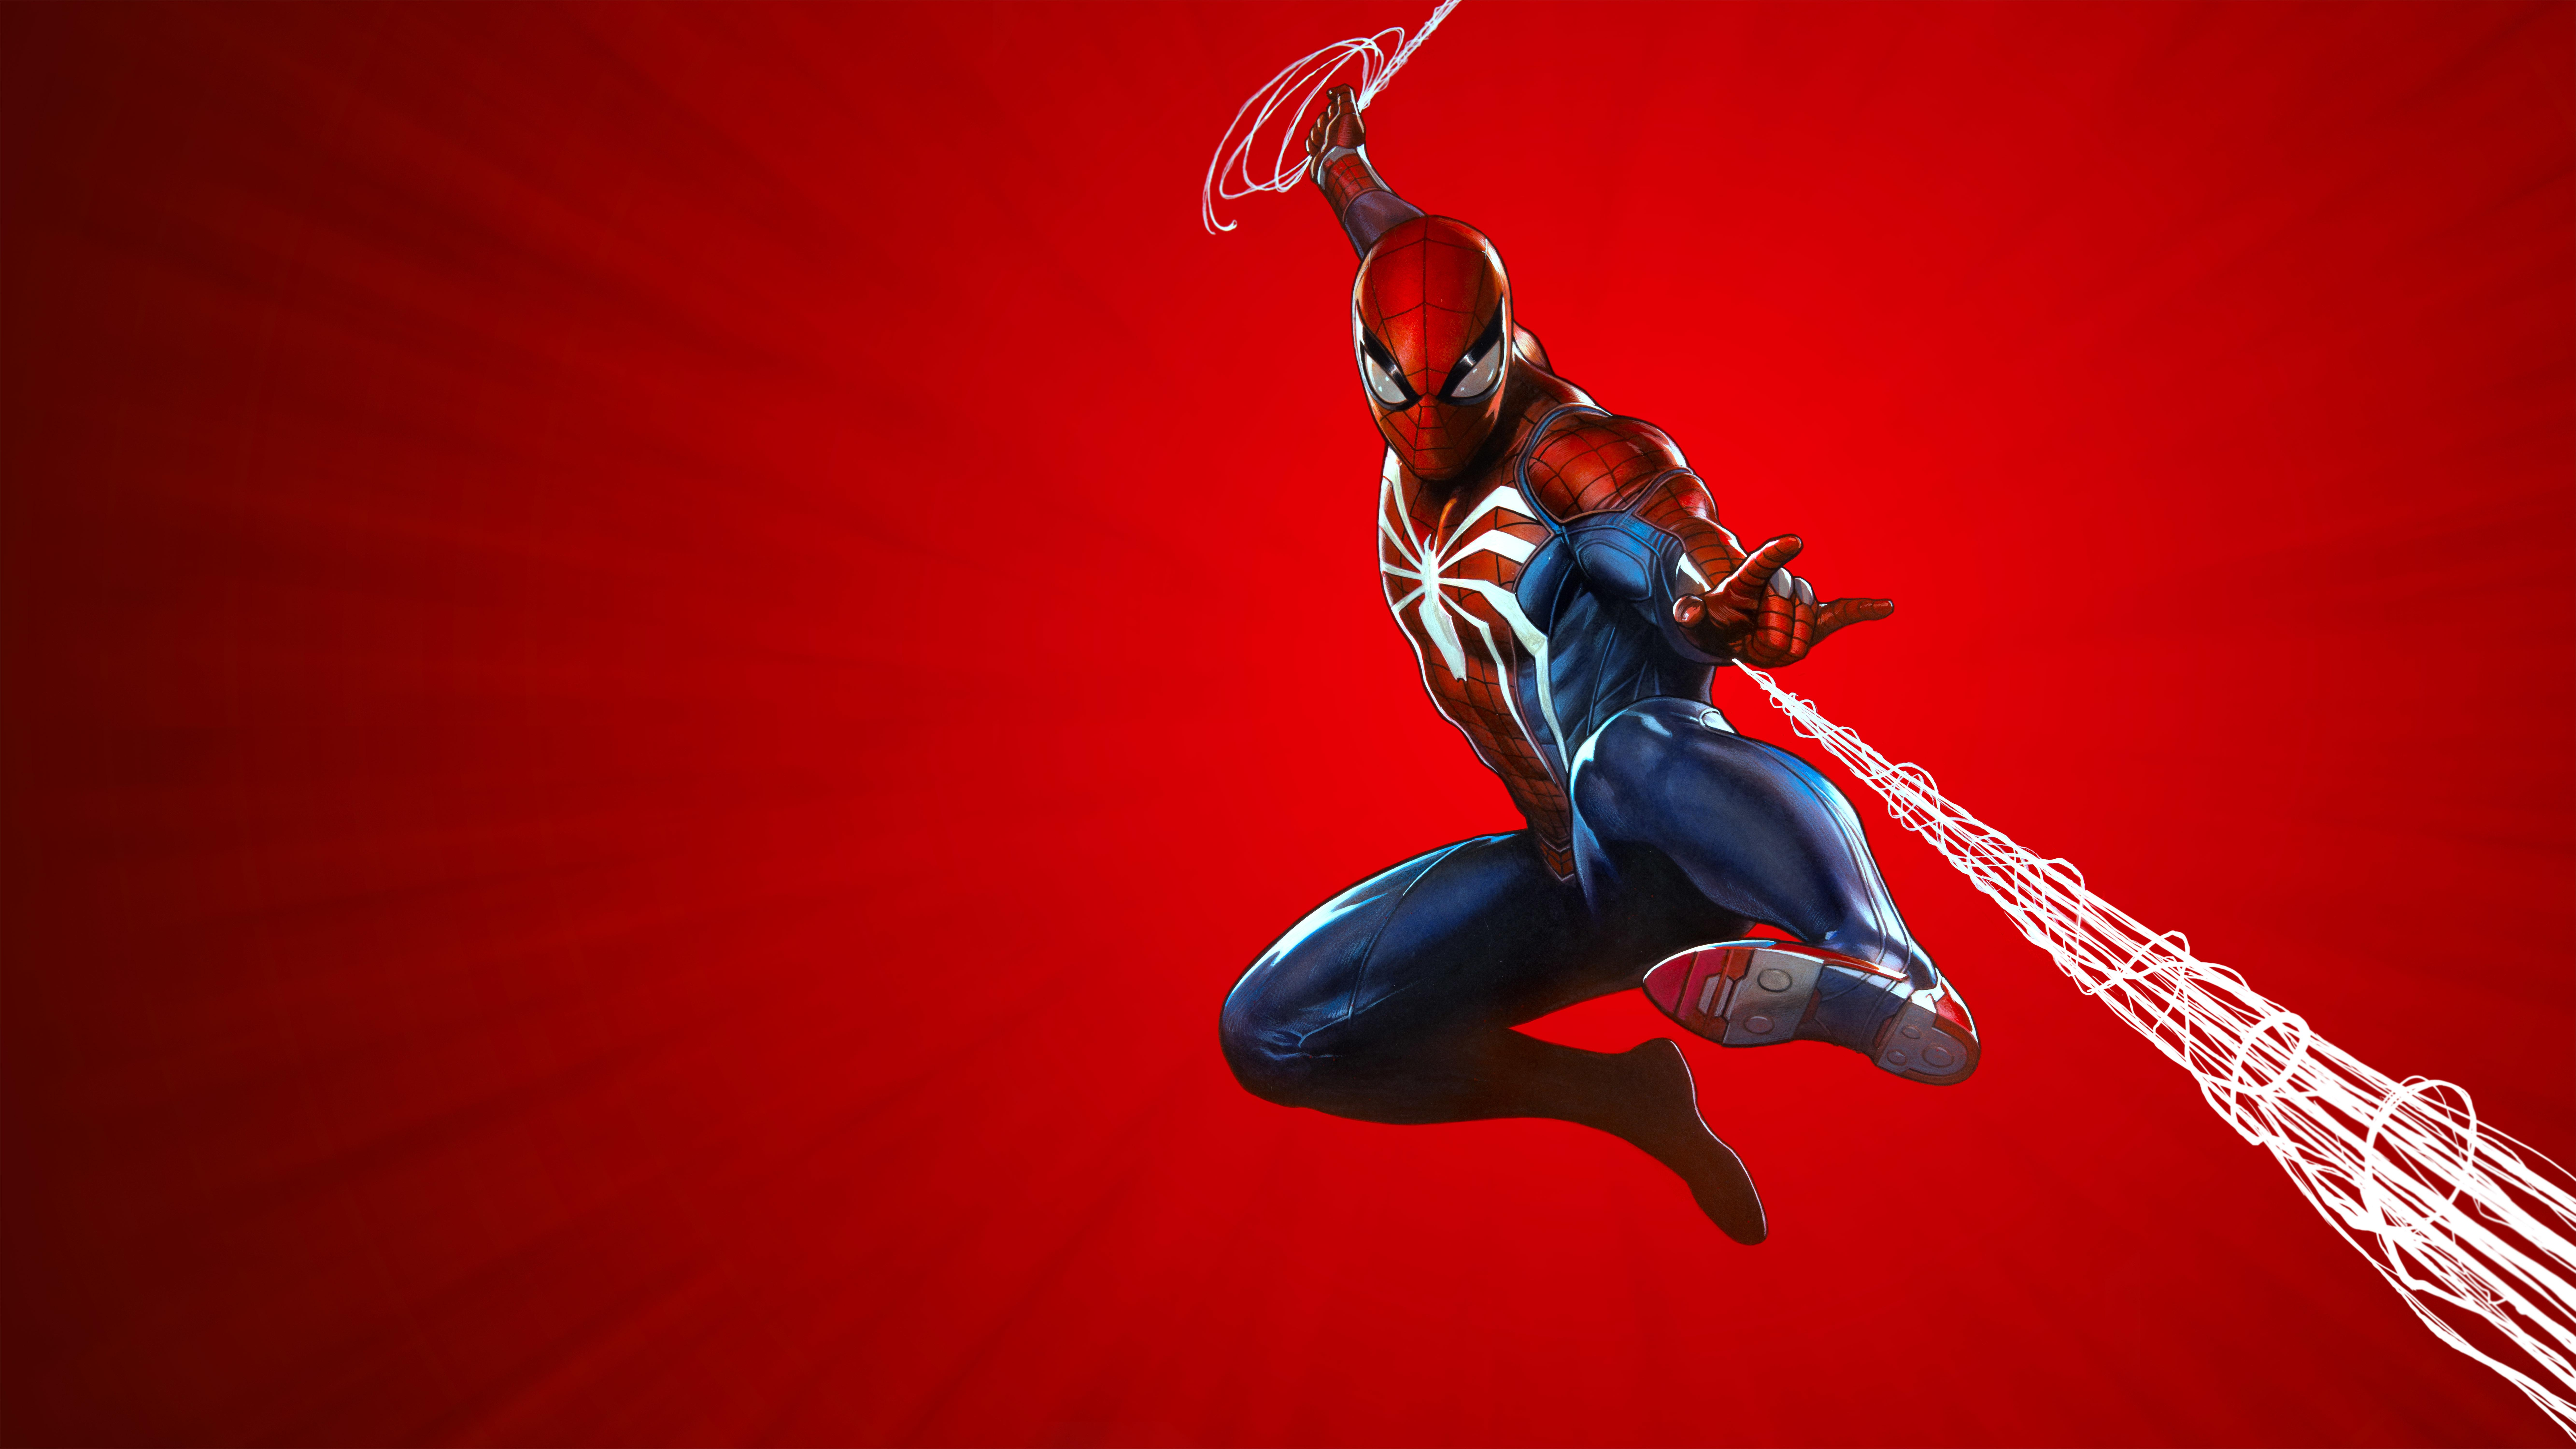 Spider Man PS4 Wallpaper, HD Games 4K Wallpaper, Image, Photo